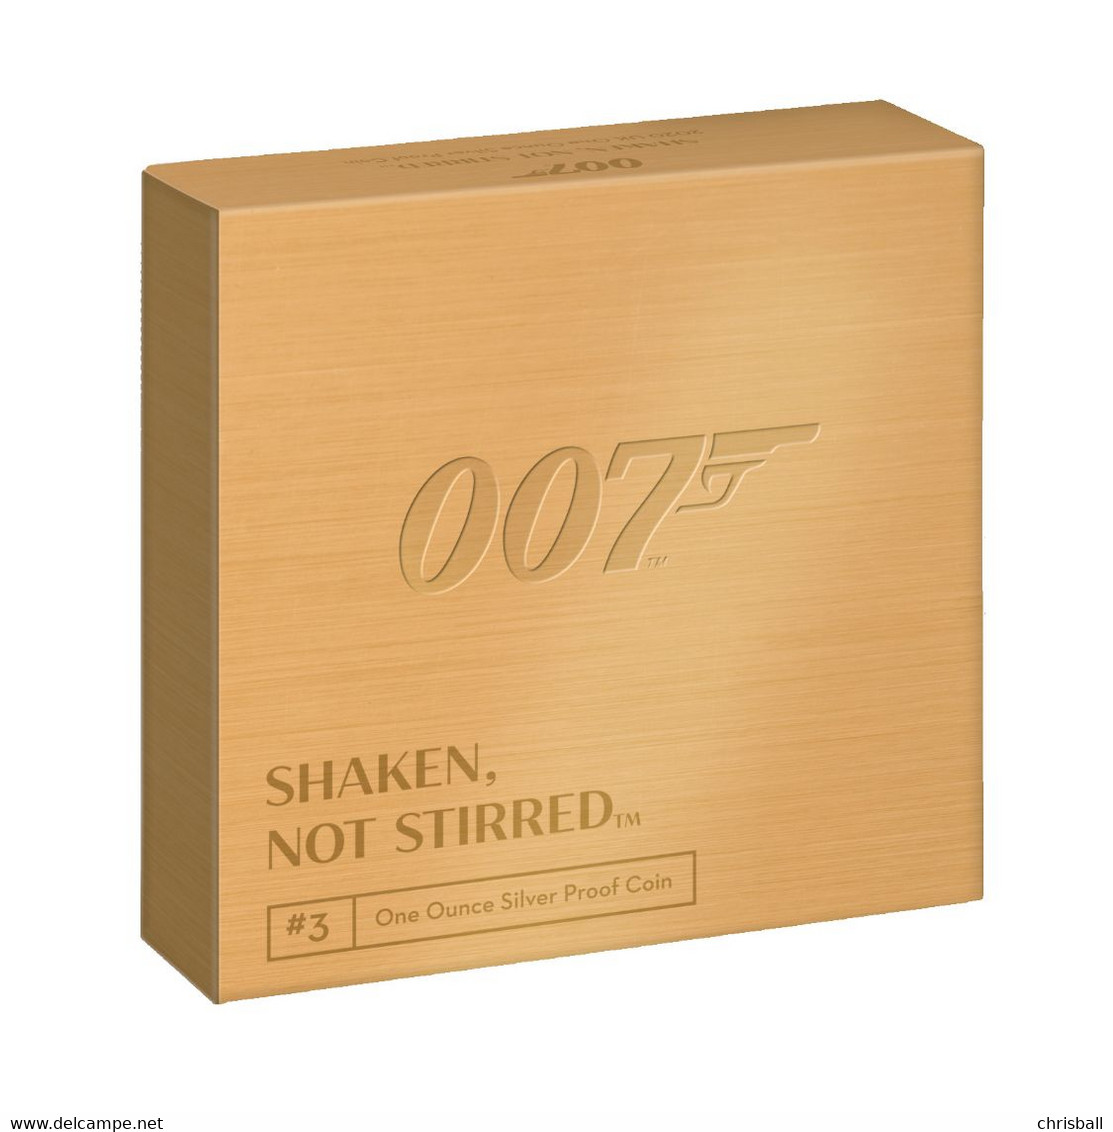 Great Britain UK  James Bond £5 Five Pound Coin - Silver Proof - Mint Sets & Proof Sets